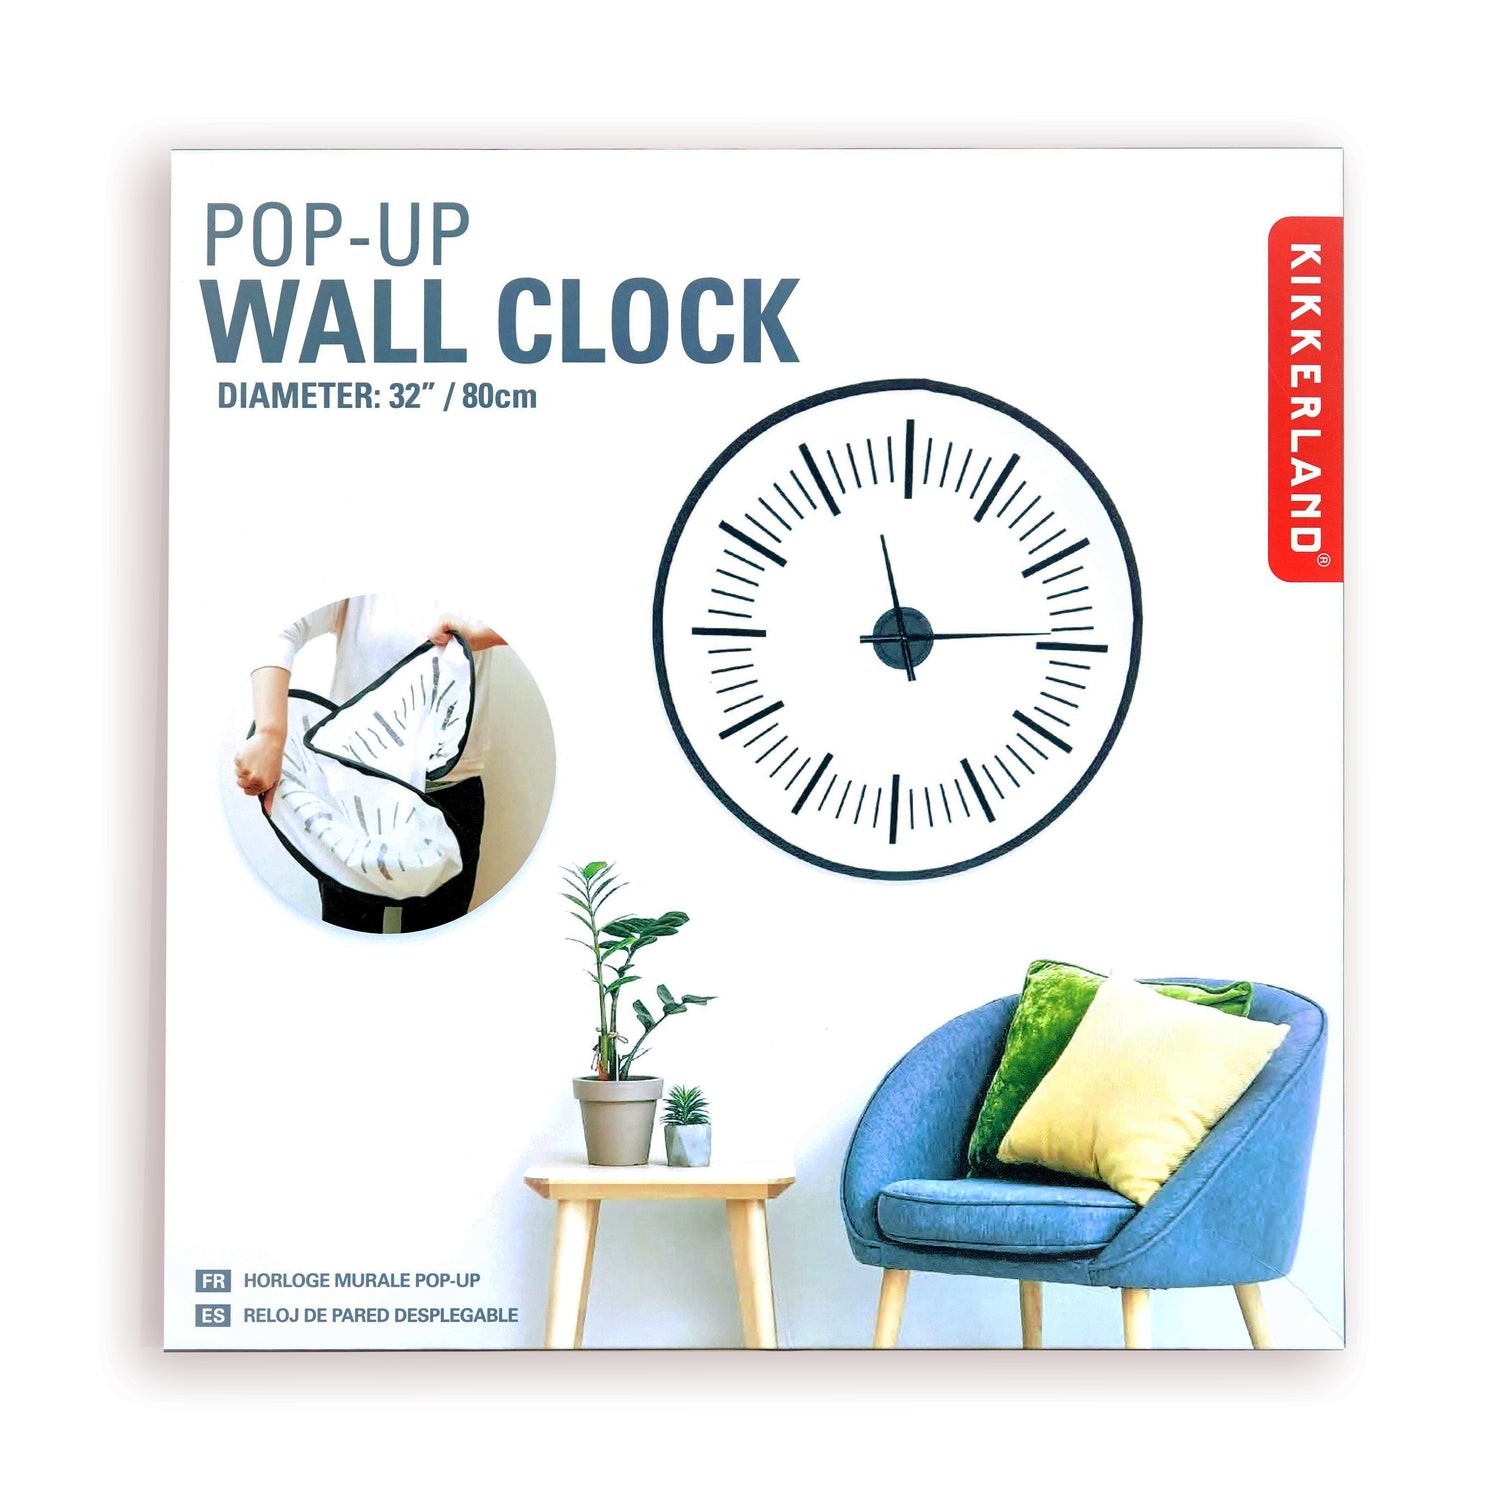 Pop-Up Wall Clock